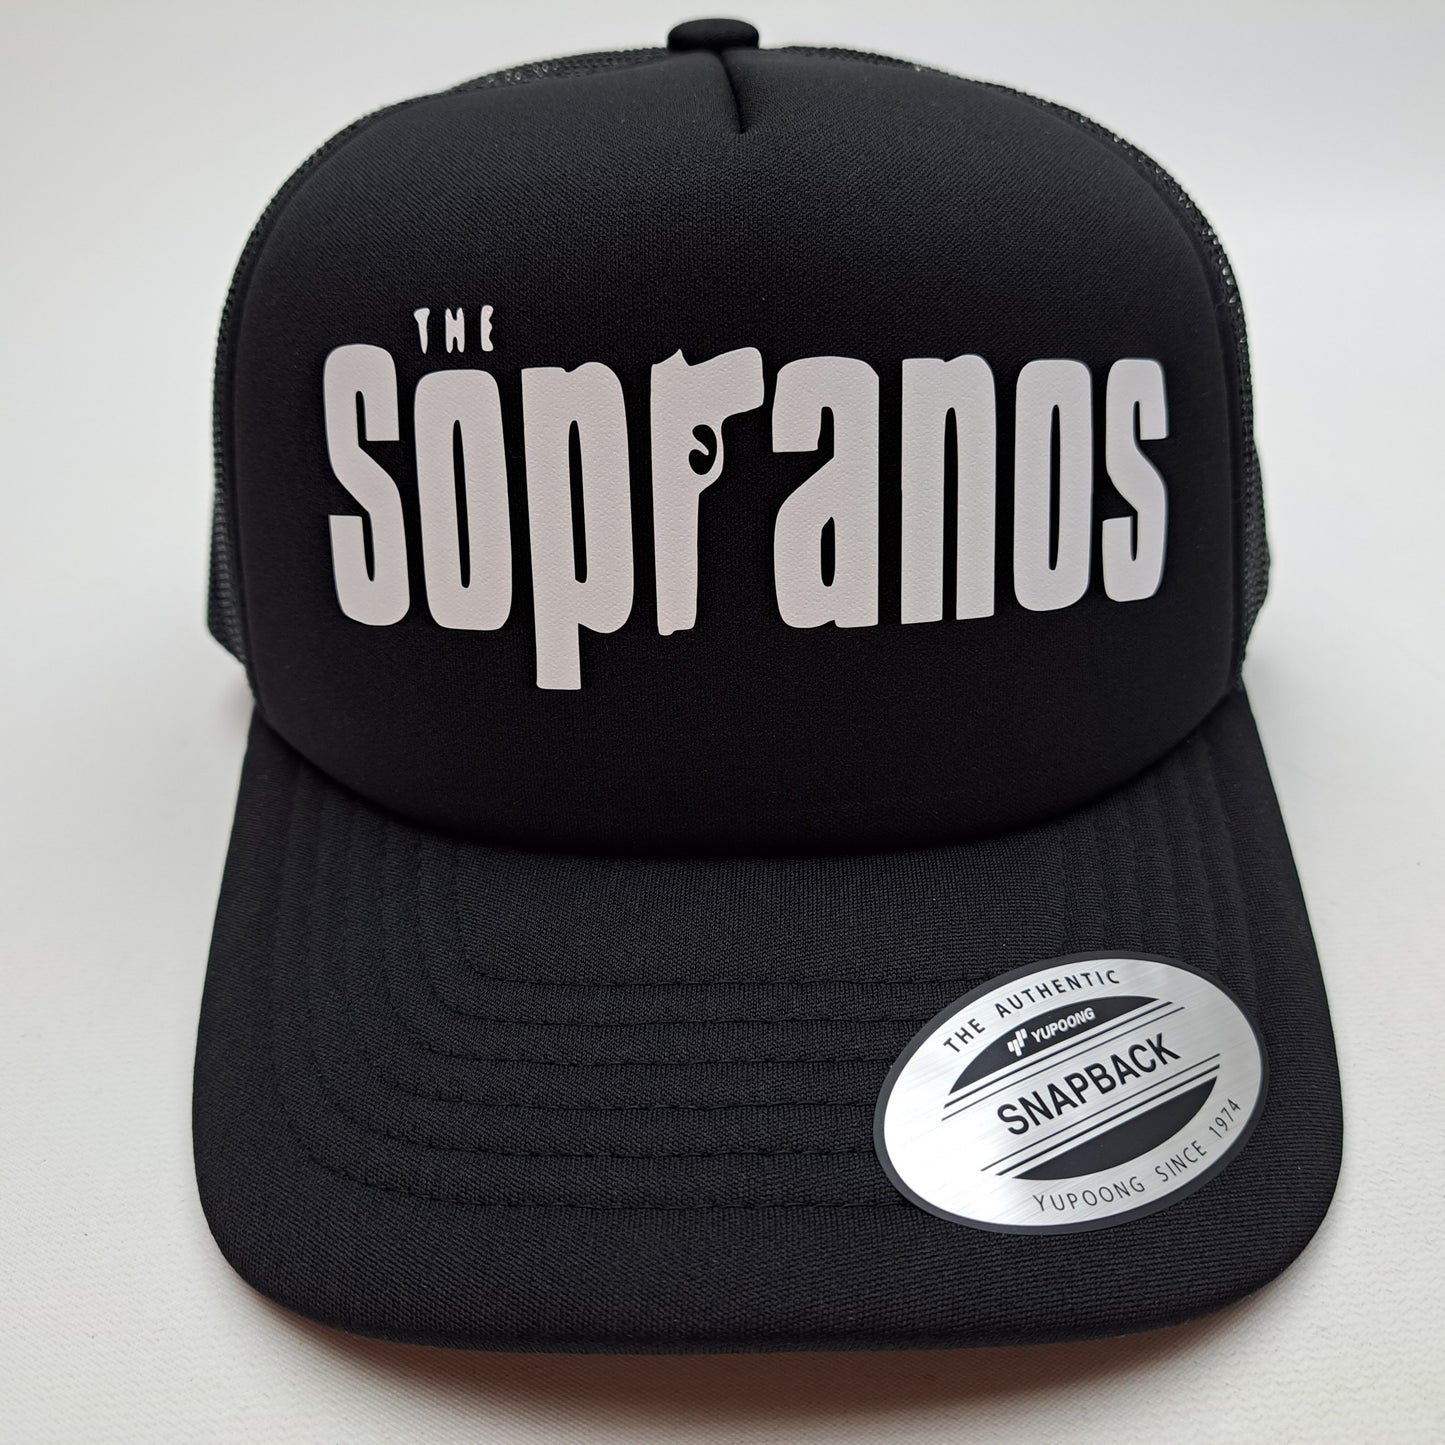 The Sopranos Foam Hat Cap Mesh Vintage Trucker Style Snapback Black